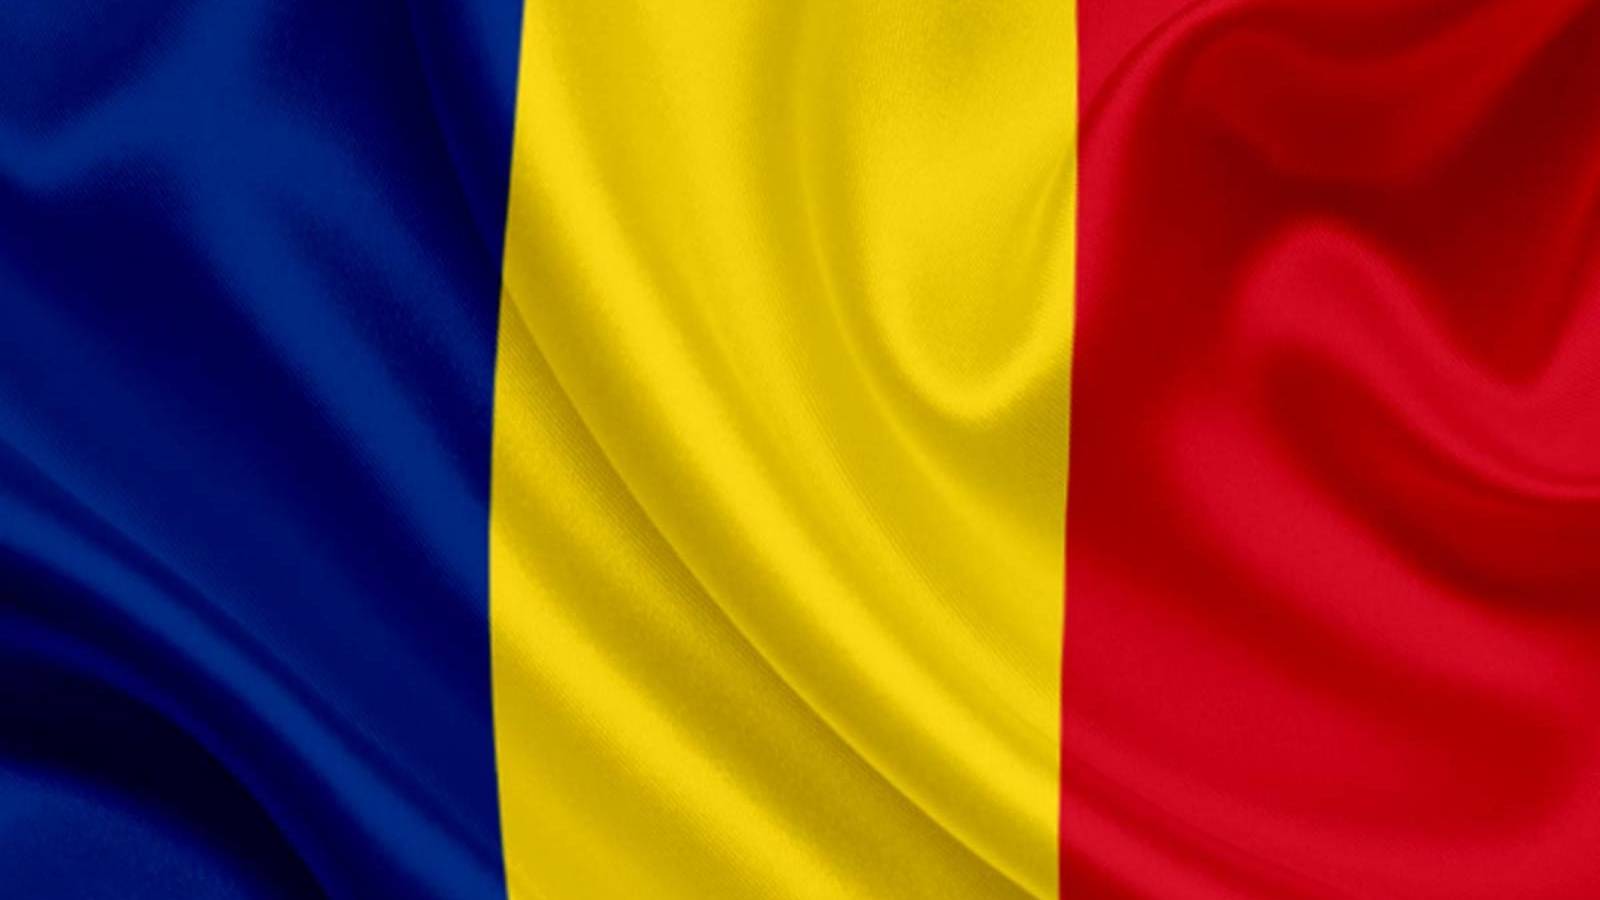 Rumania crisis alarmante medidas radicales oleada 4